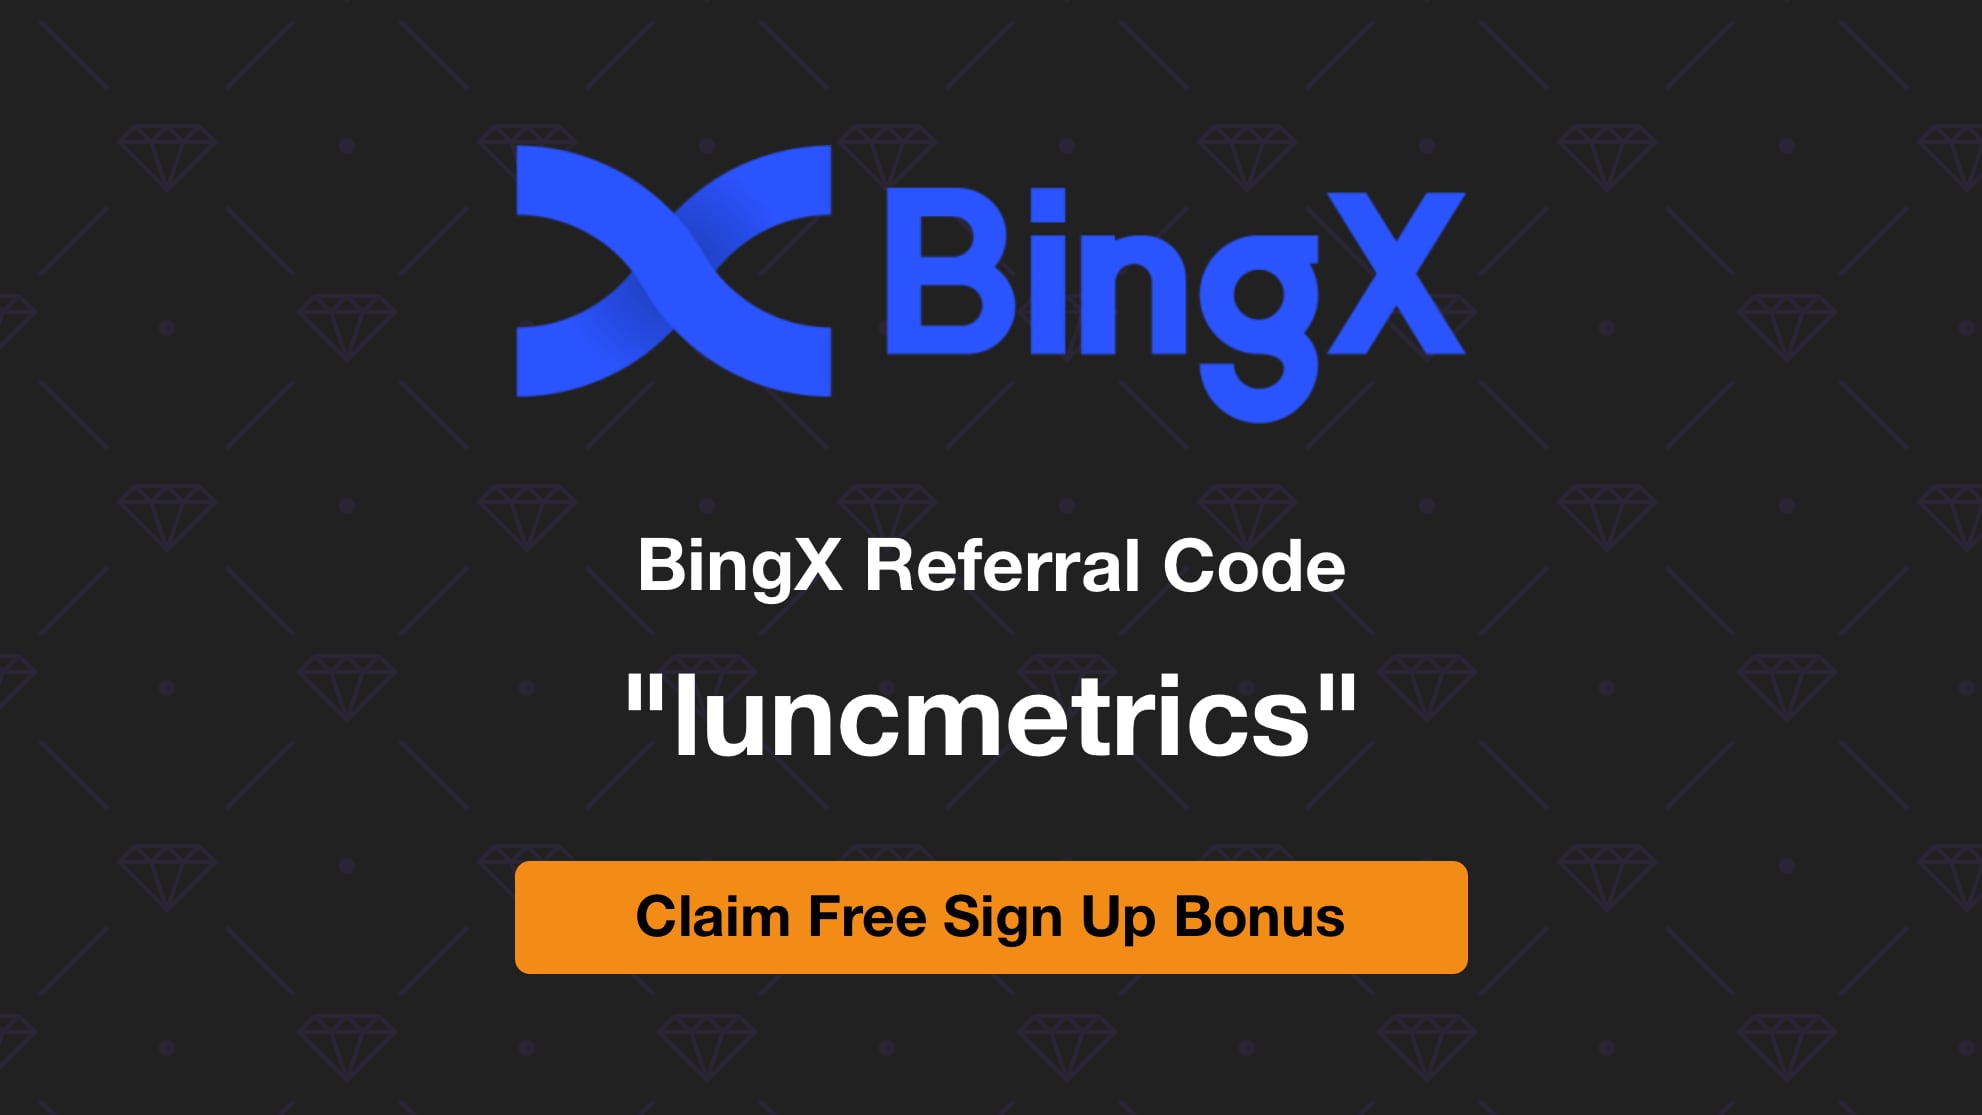 BingX Referral Code luncmetrics